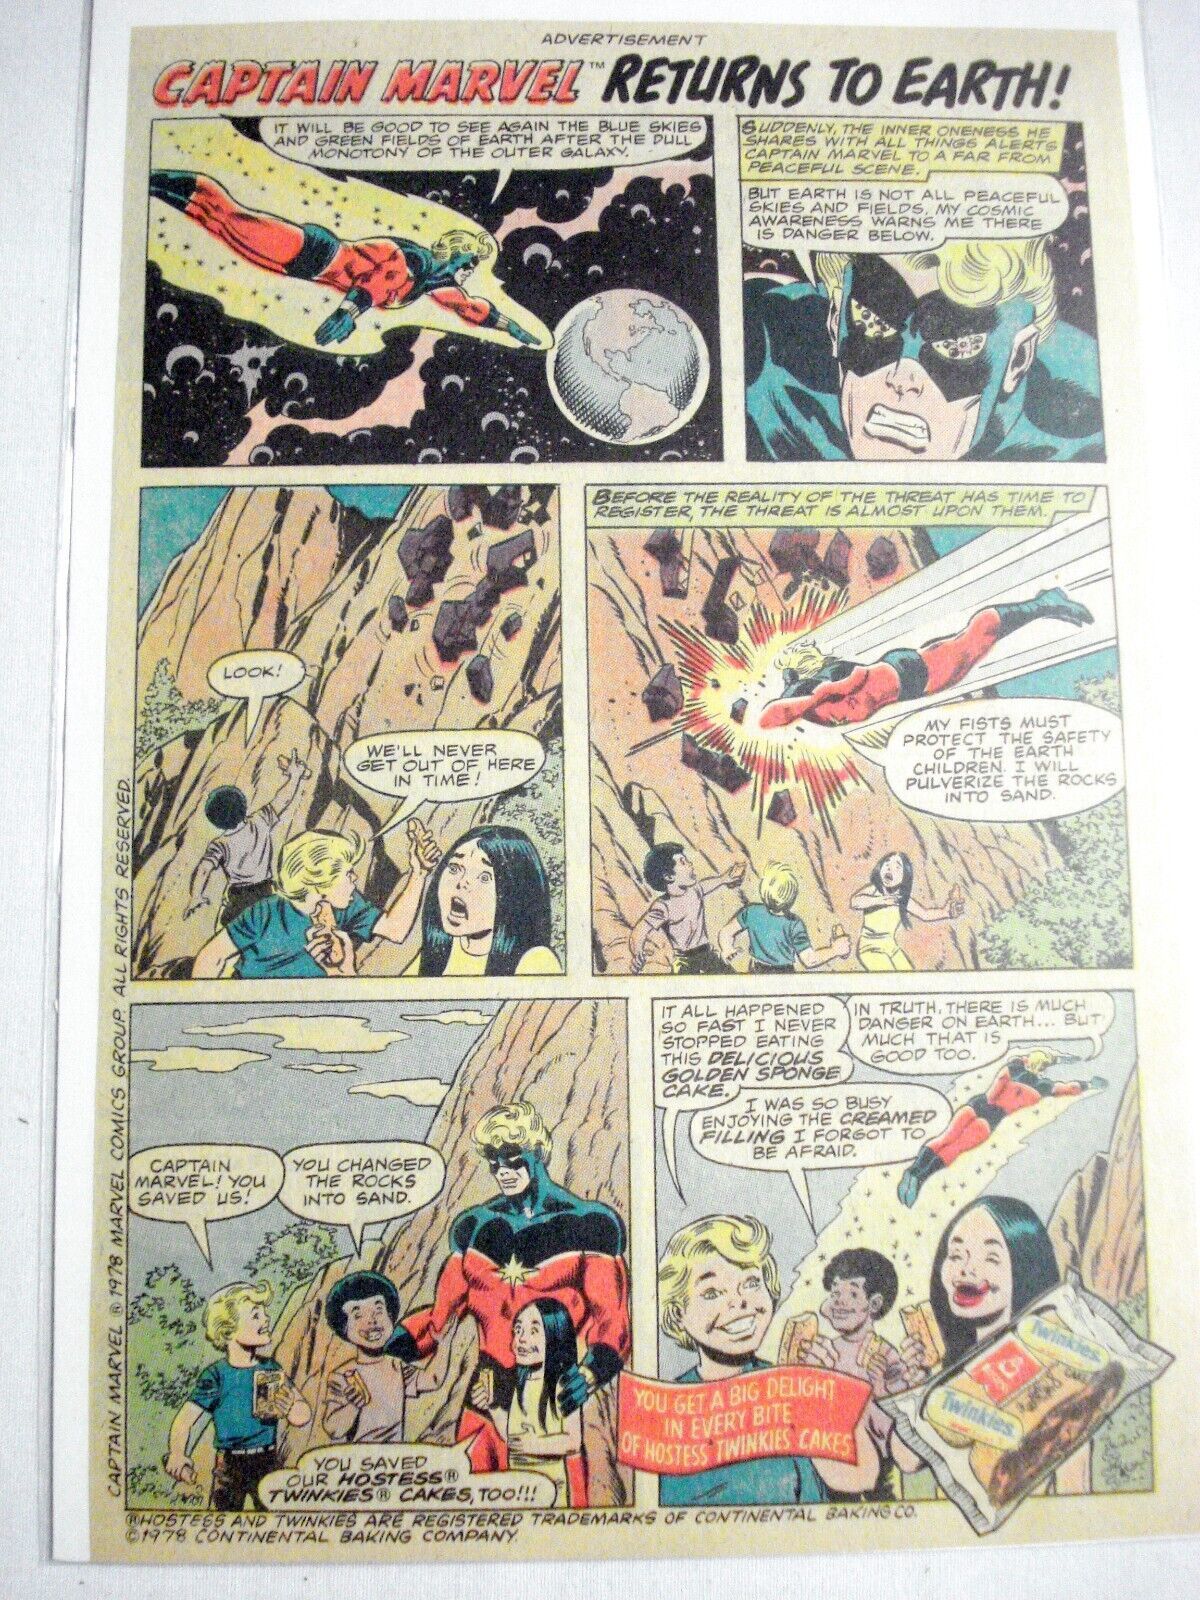 1978 Ad Captain Marvel Returns to Earth Hostess Twinkies - $7.99